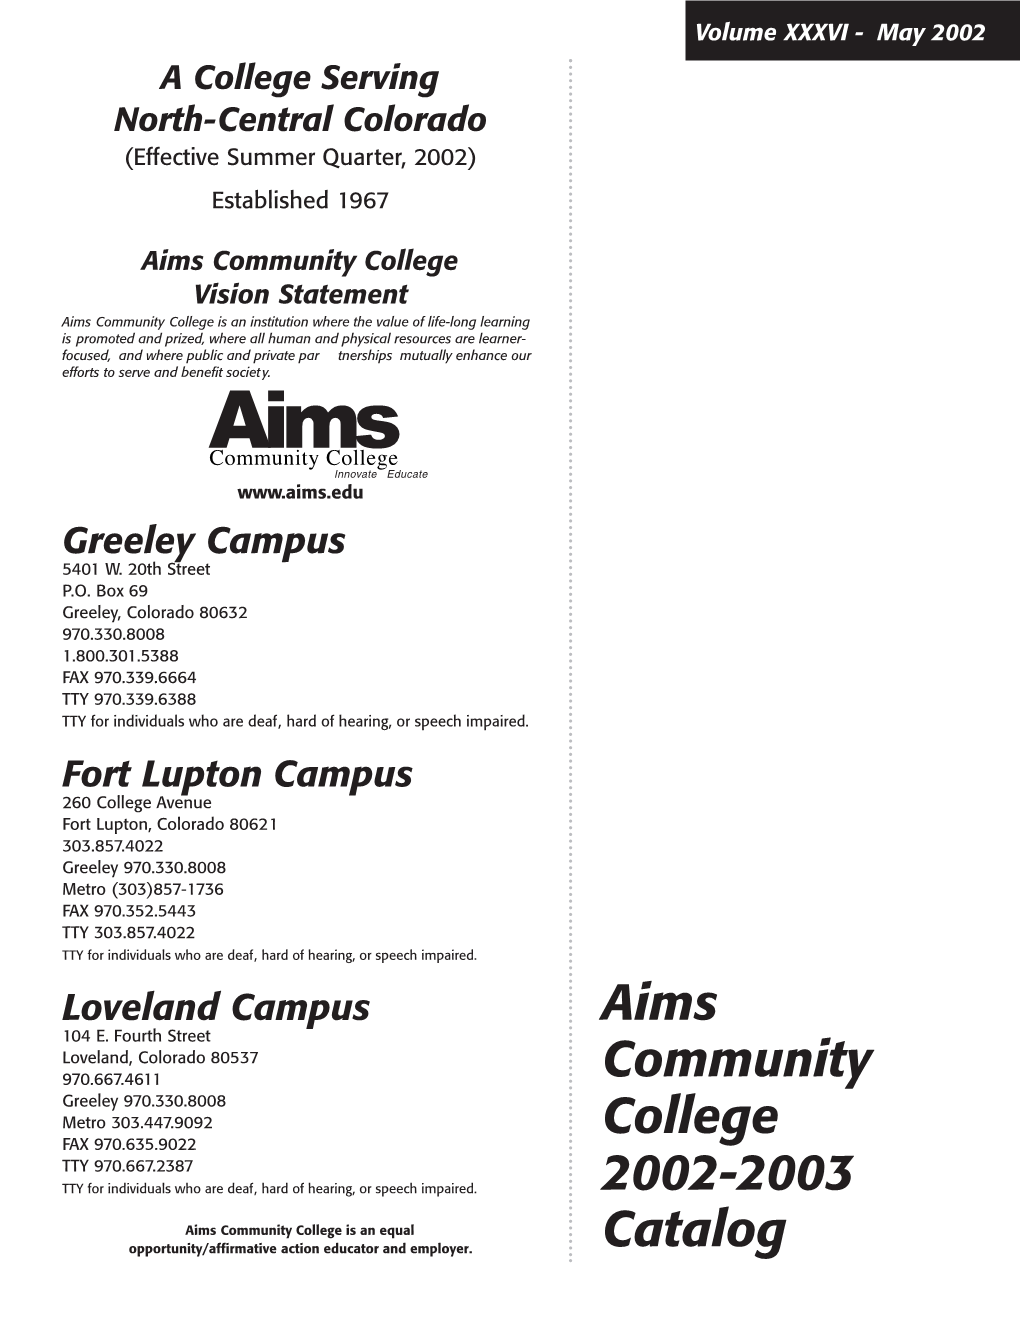 Aims Community College Catalog 2002-03